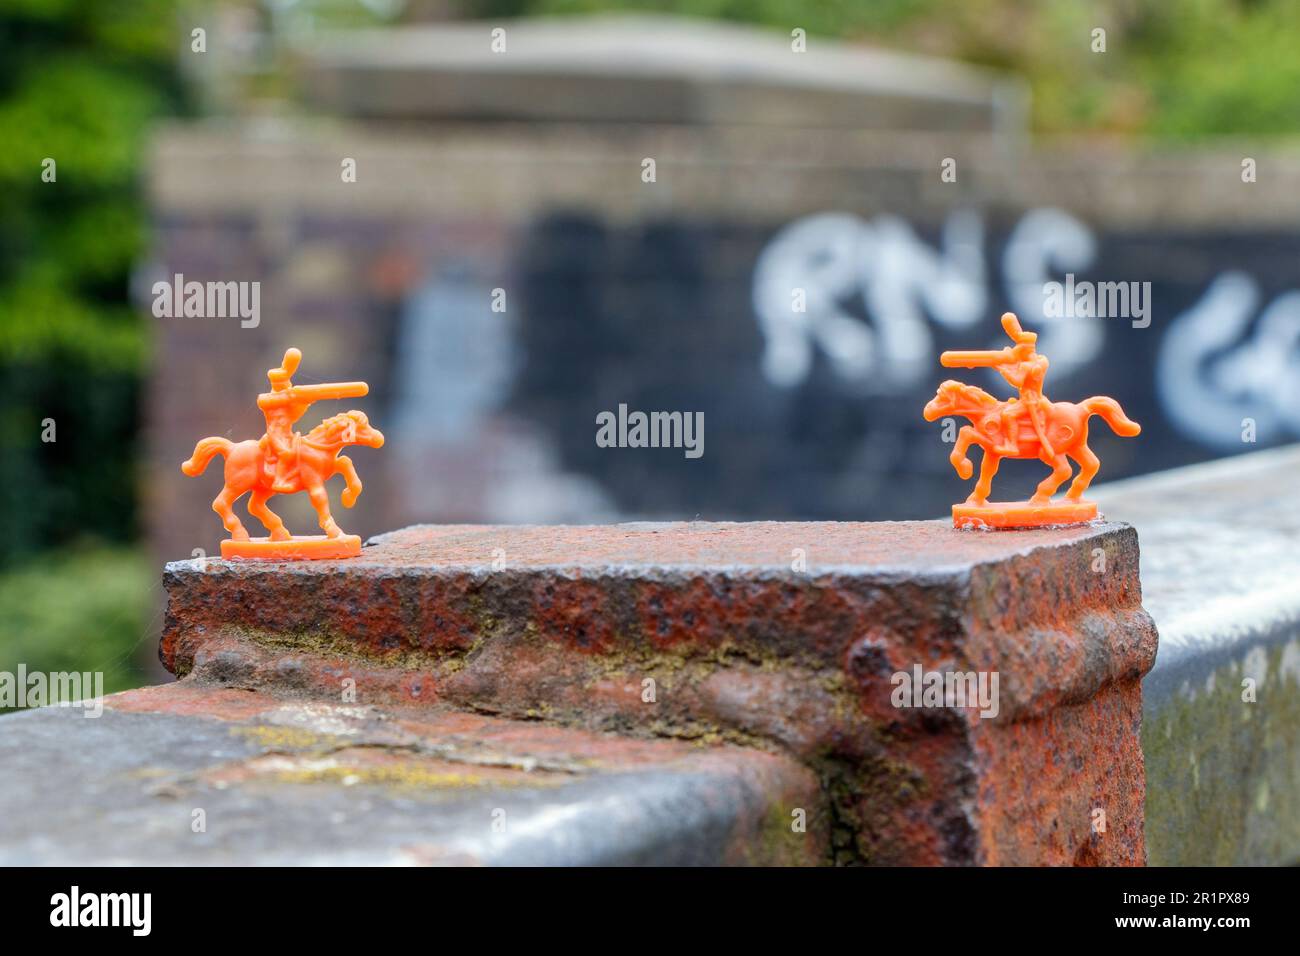 Miniature orange plastic toy soldiers glued to a bridge parapet on Parkland Walk mature trail in North London, UK Stock Photo